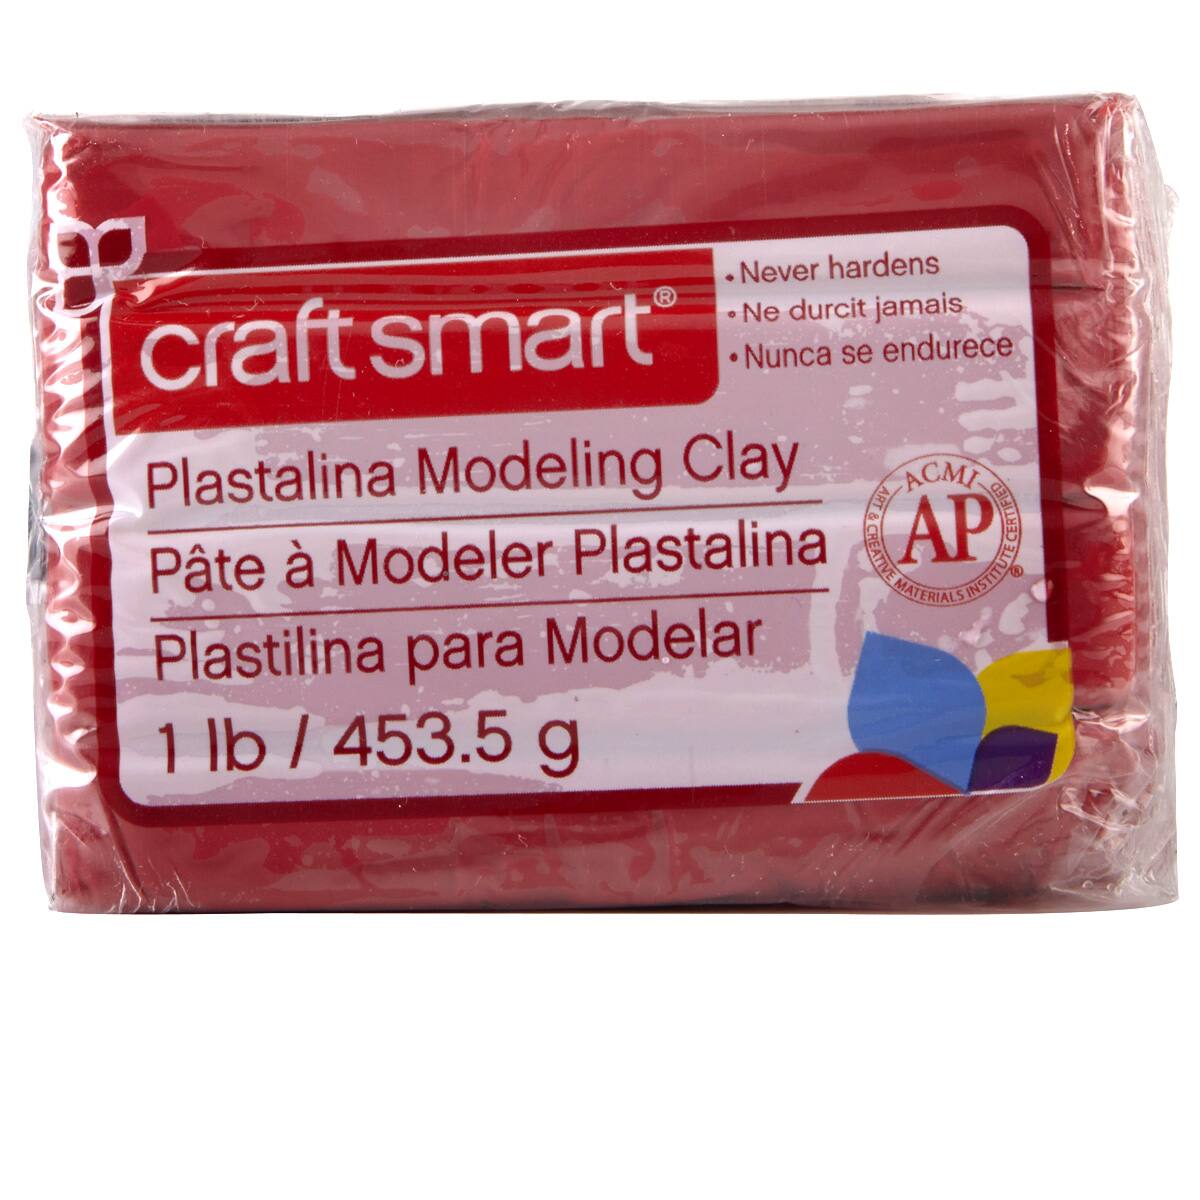 craft smart plastalina modeling clay